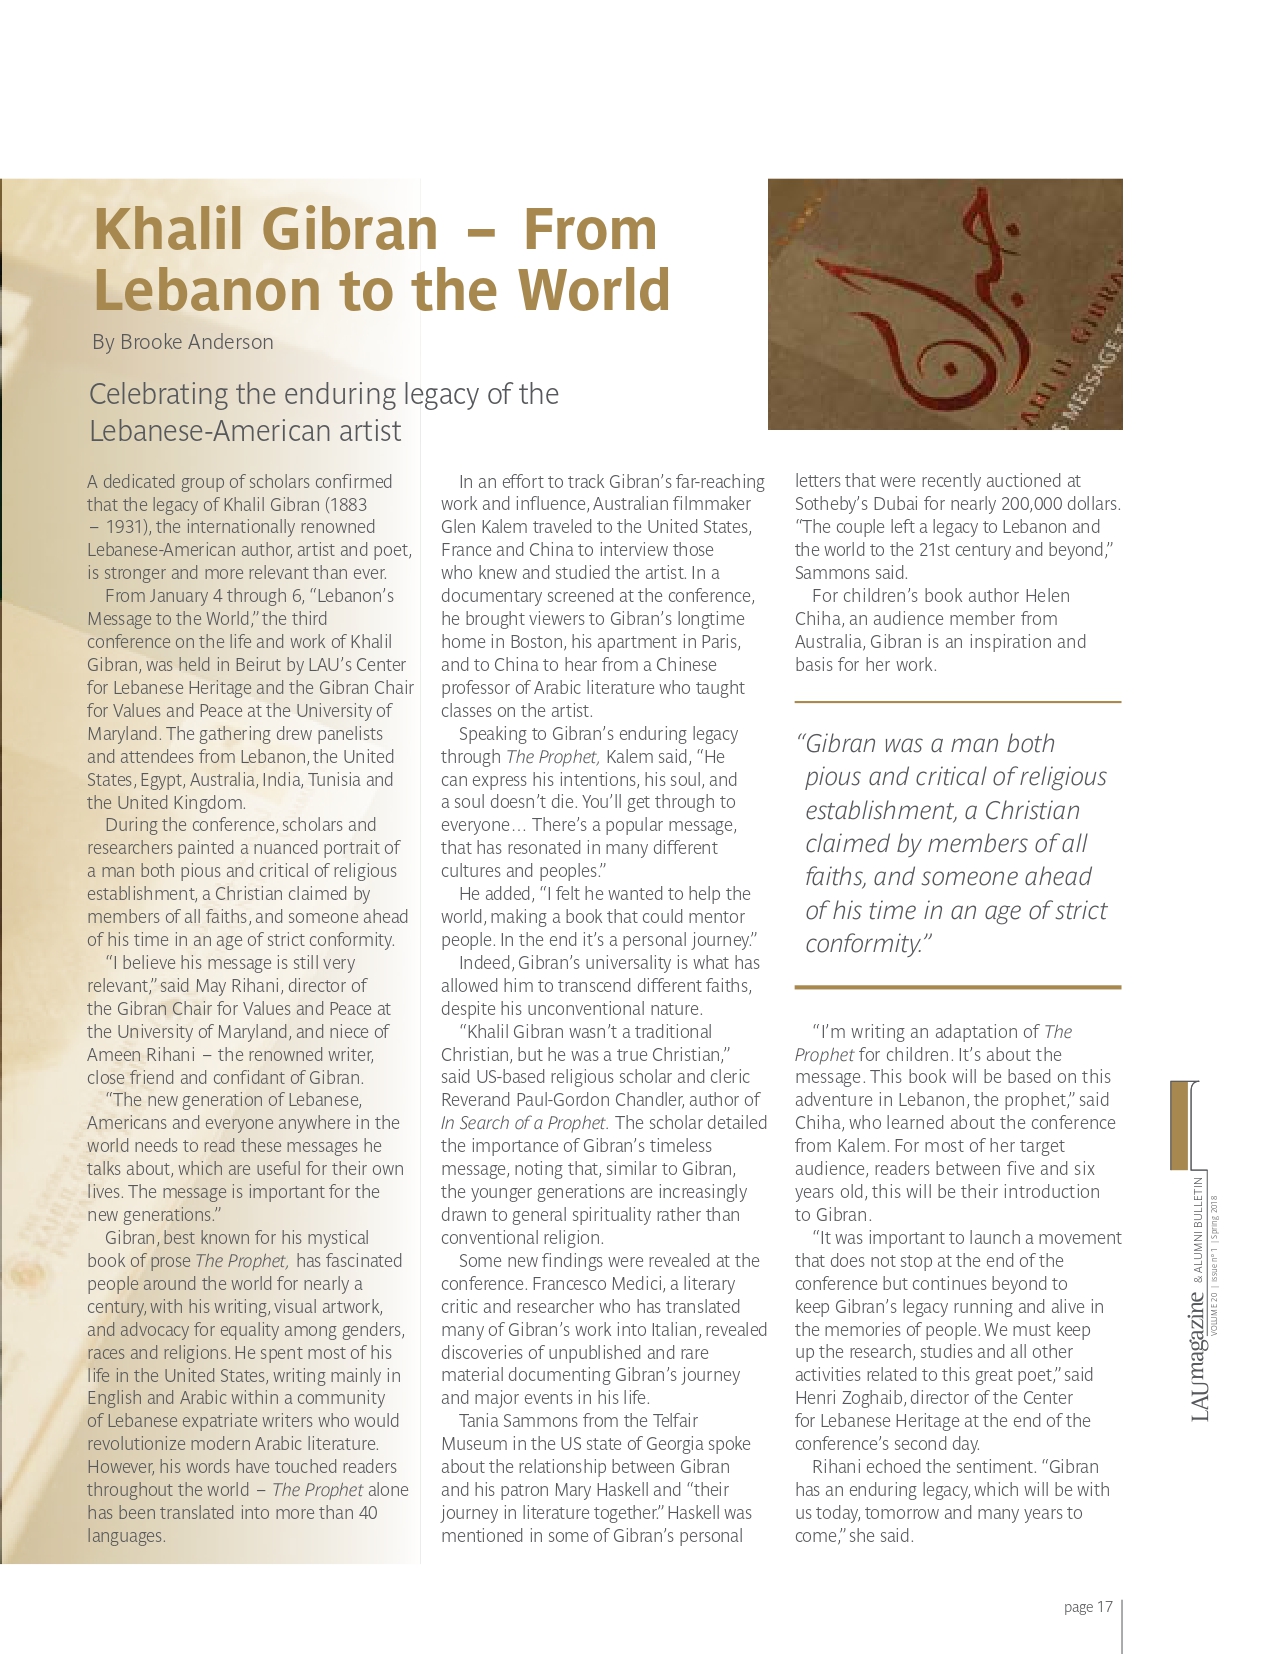 Brooke Anderson, "Khalil Gibran – From Lebanon to the World", «LAU Magazine & Alumni Bulletin», VOLUME 20, issue nº 1, Spring 2018, pp. 16-17.